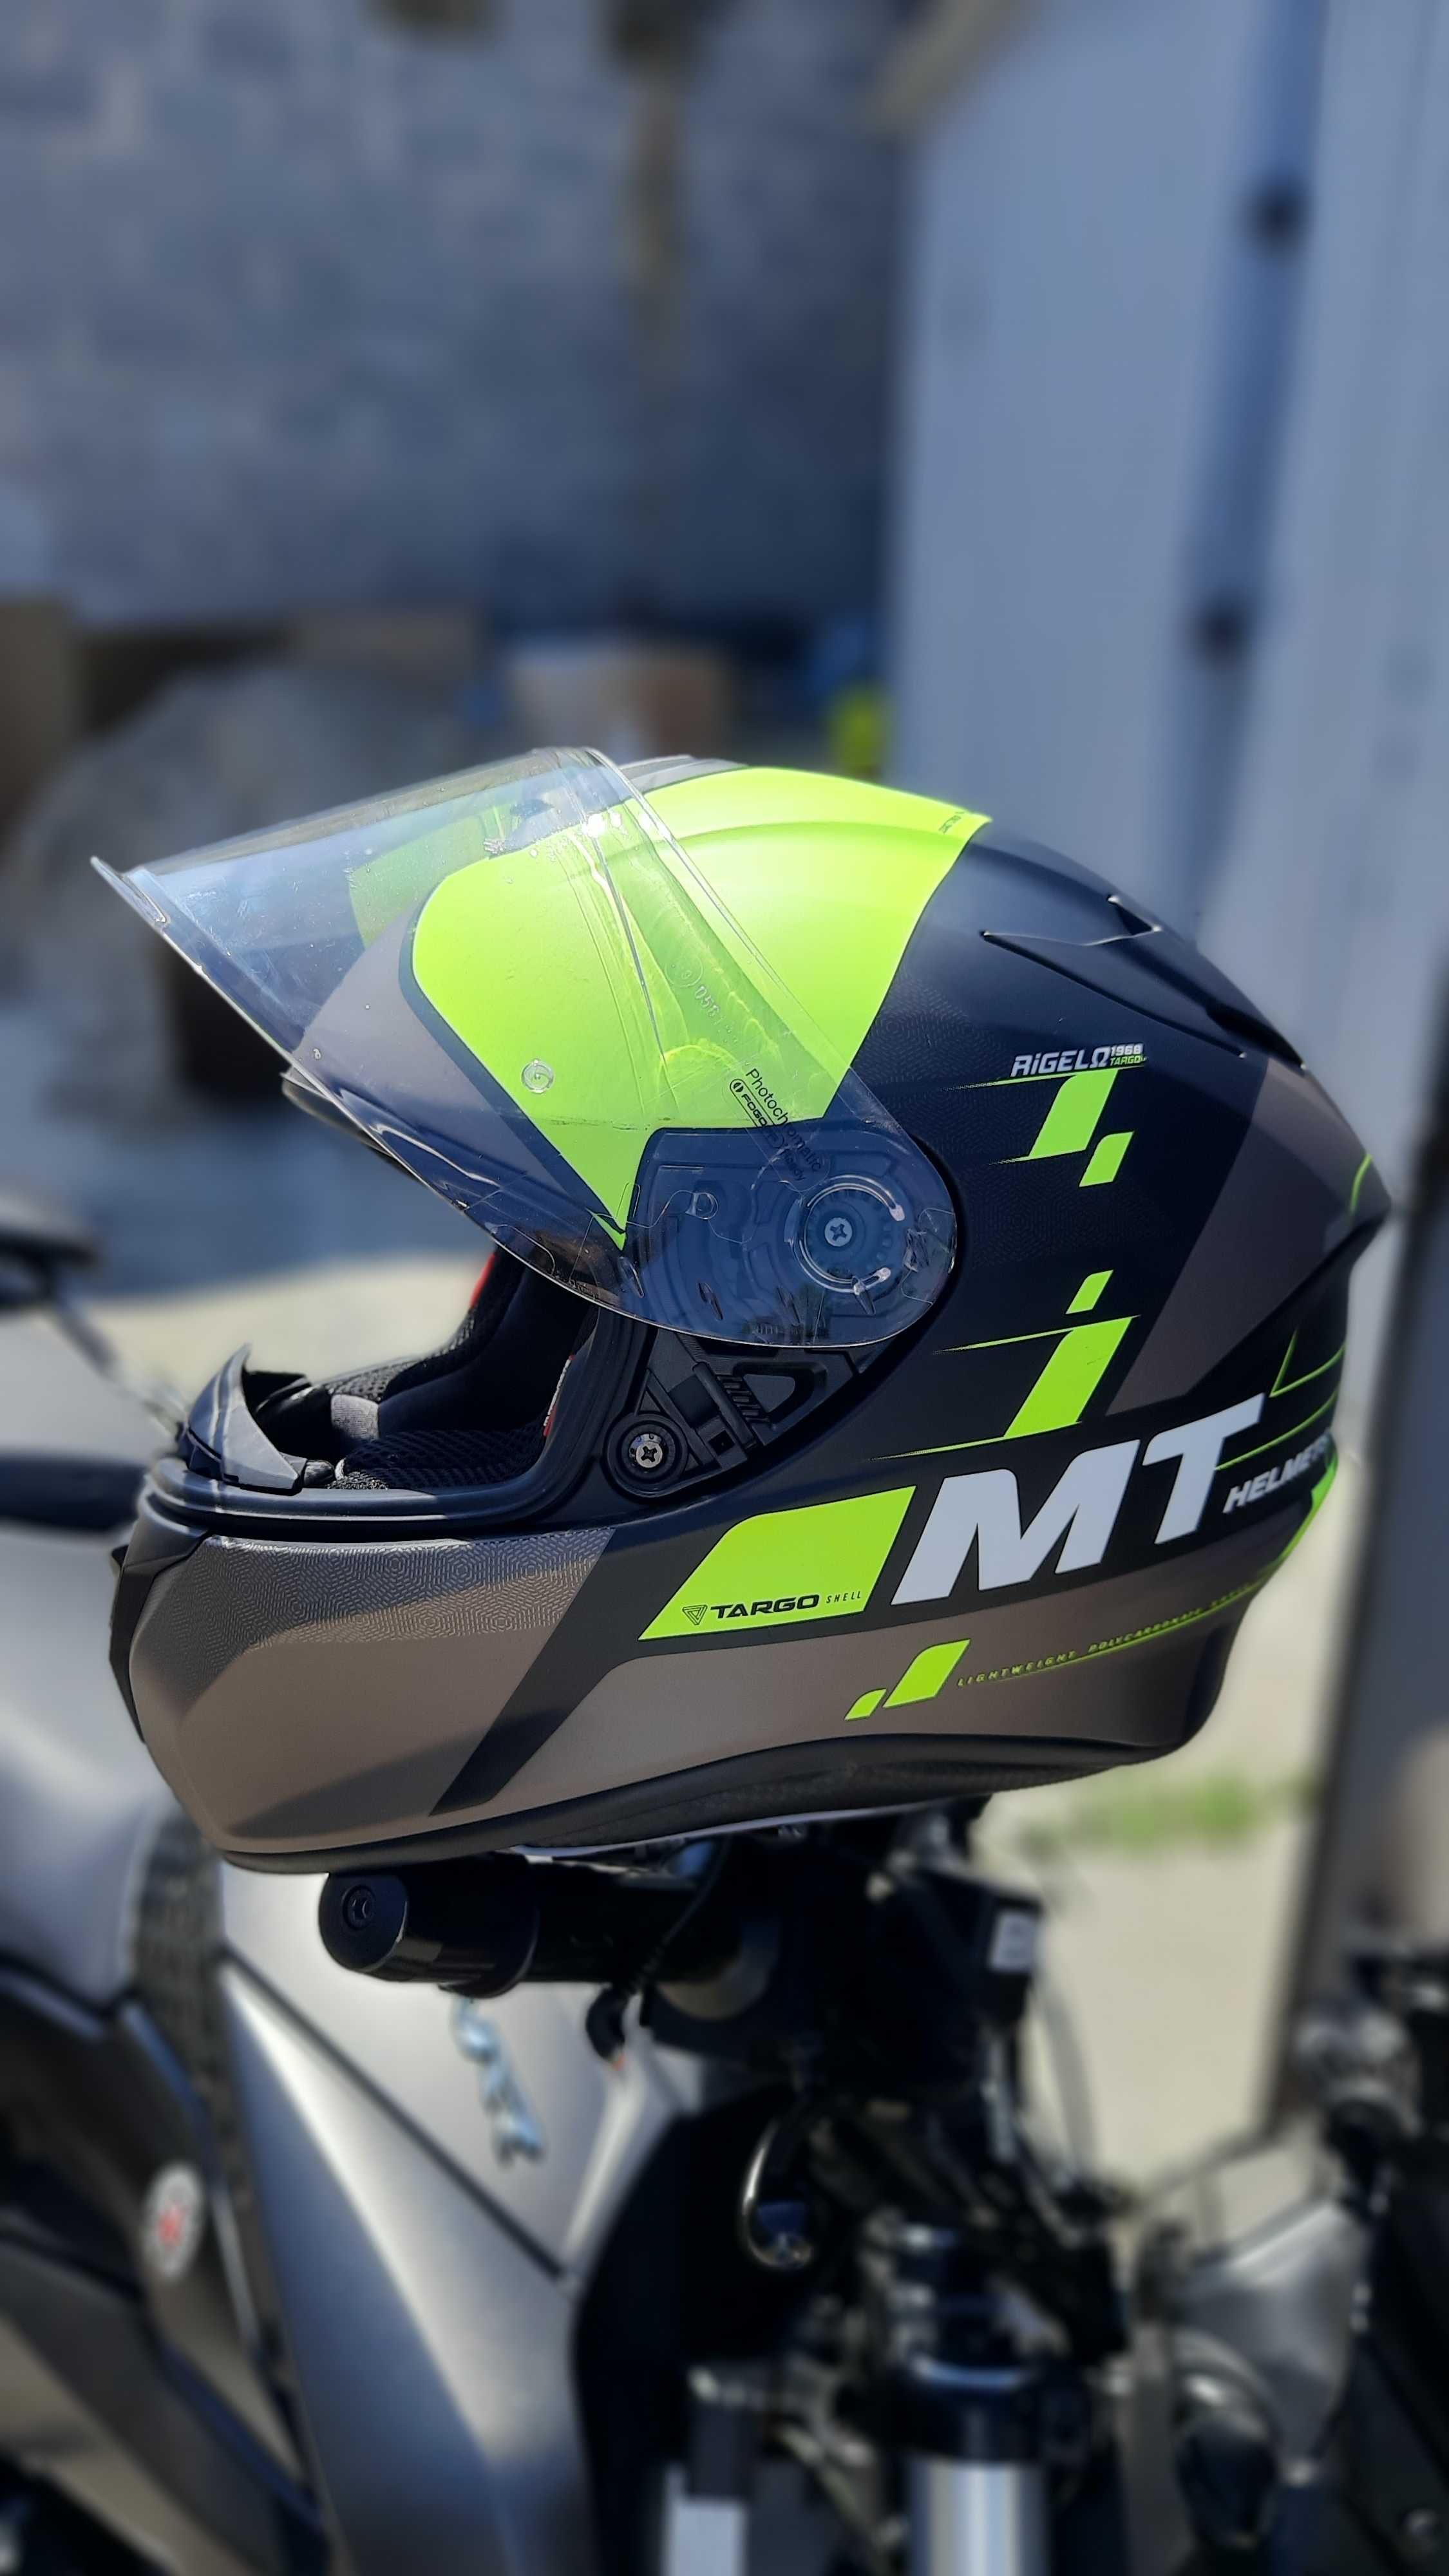 Мотошолом MT Helmets Targo Rigel М(57-58) - майже новий